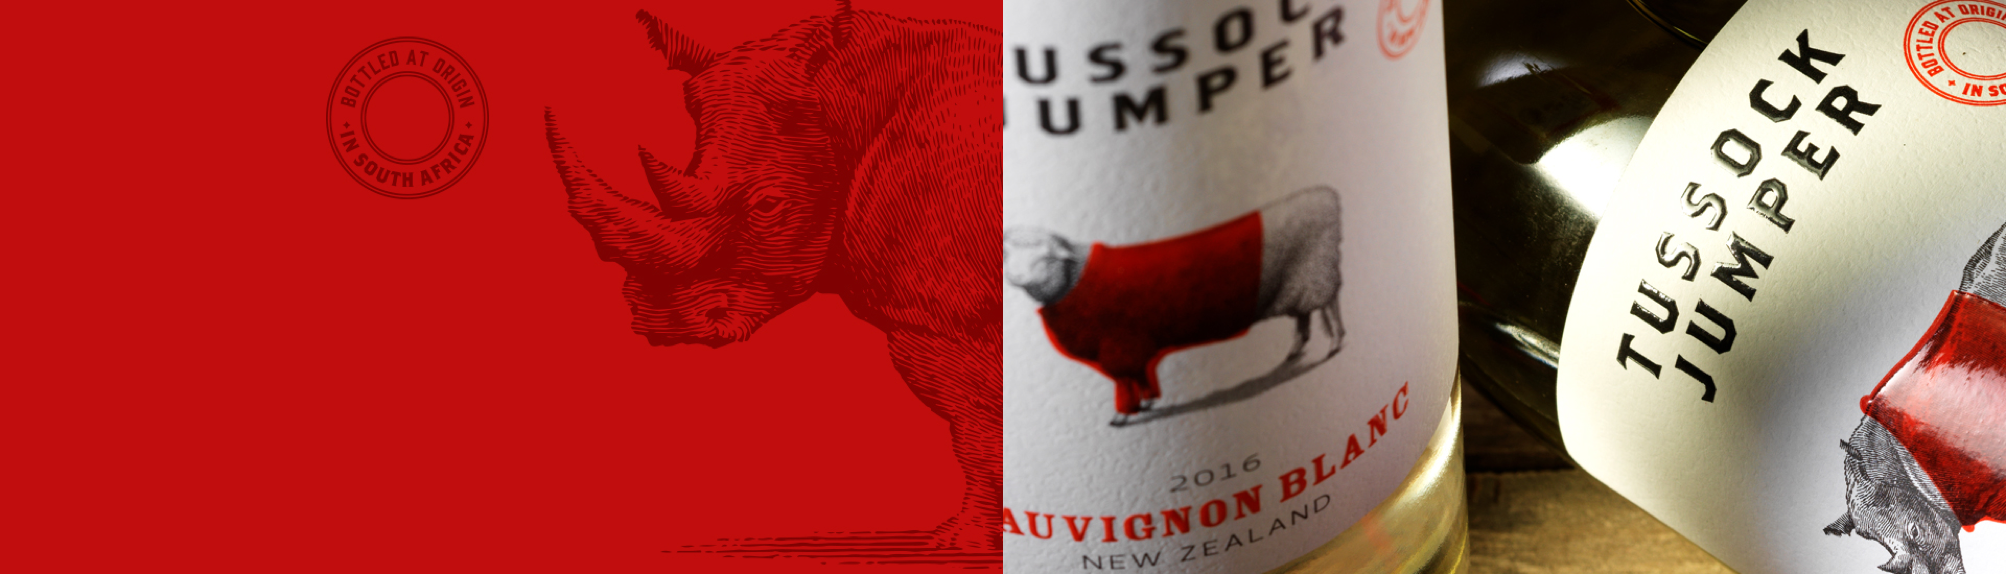 Tussock Jumper Wines - South Africa - Shiraz Grenache Viognier